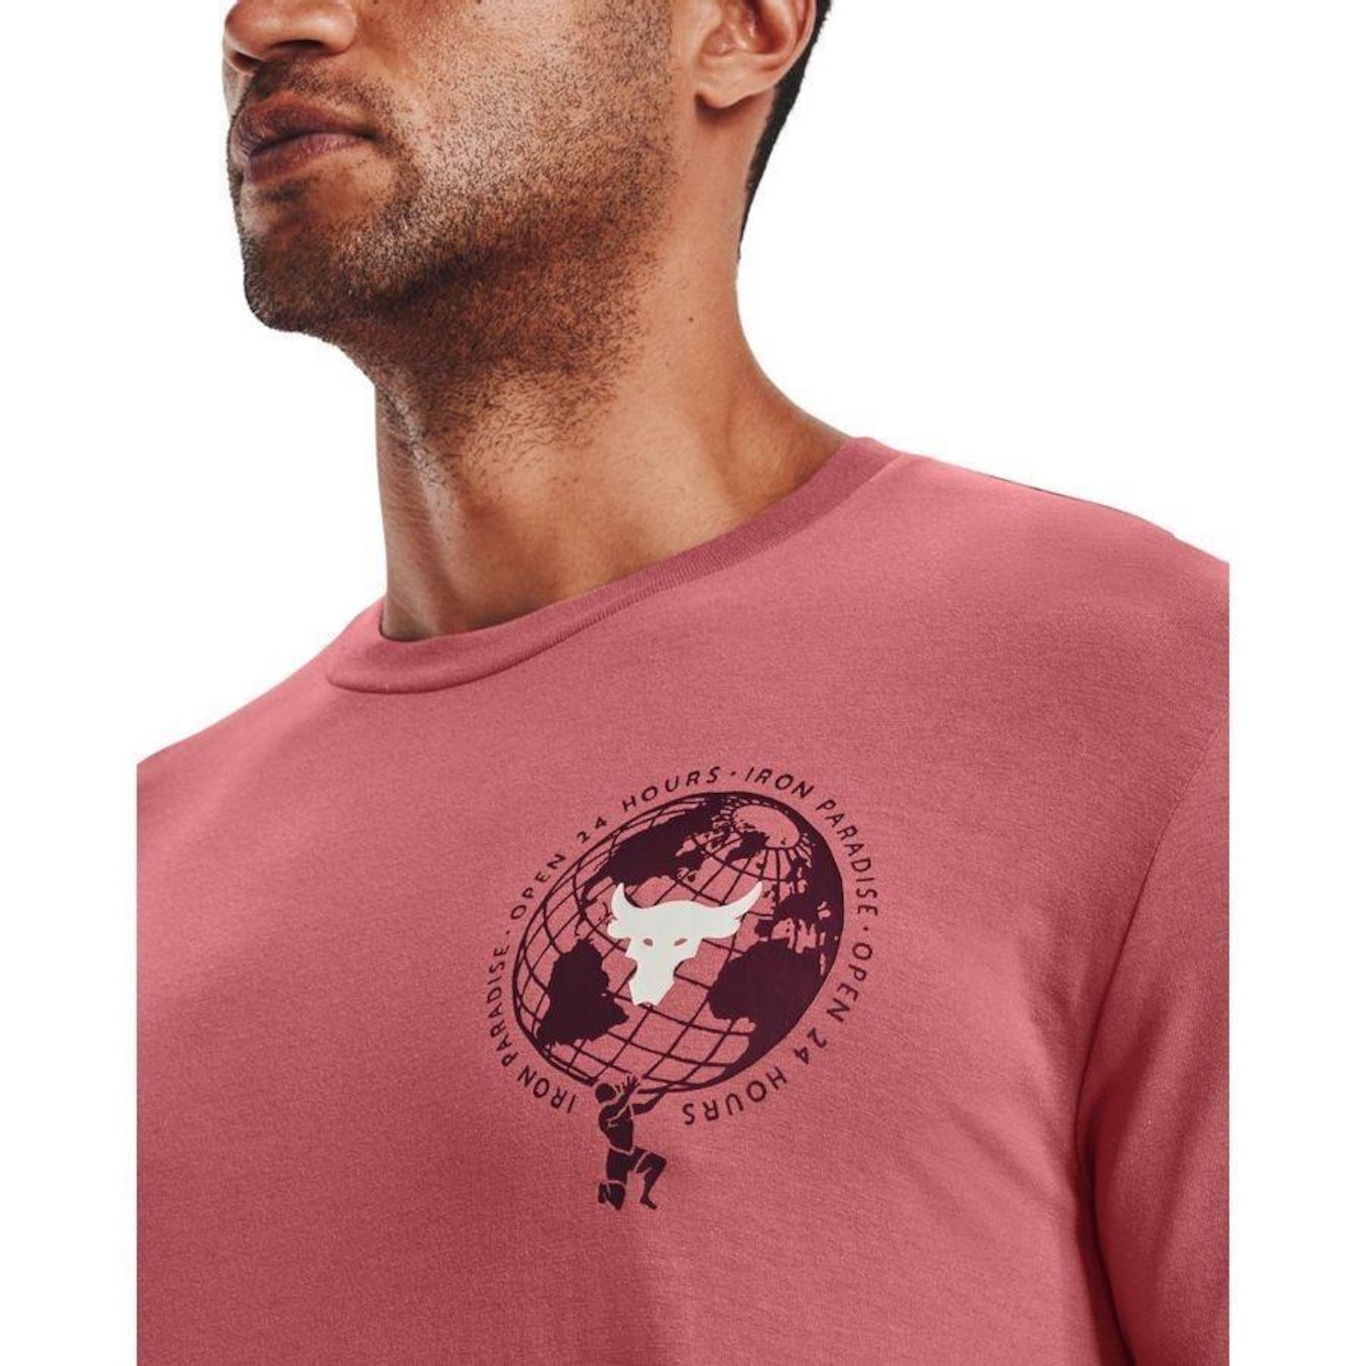 Camiseta Under Armour PJT Rock Open 24 Hours - Masculina